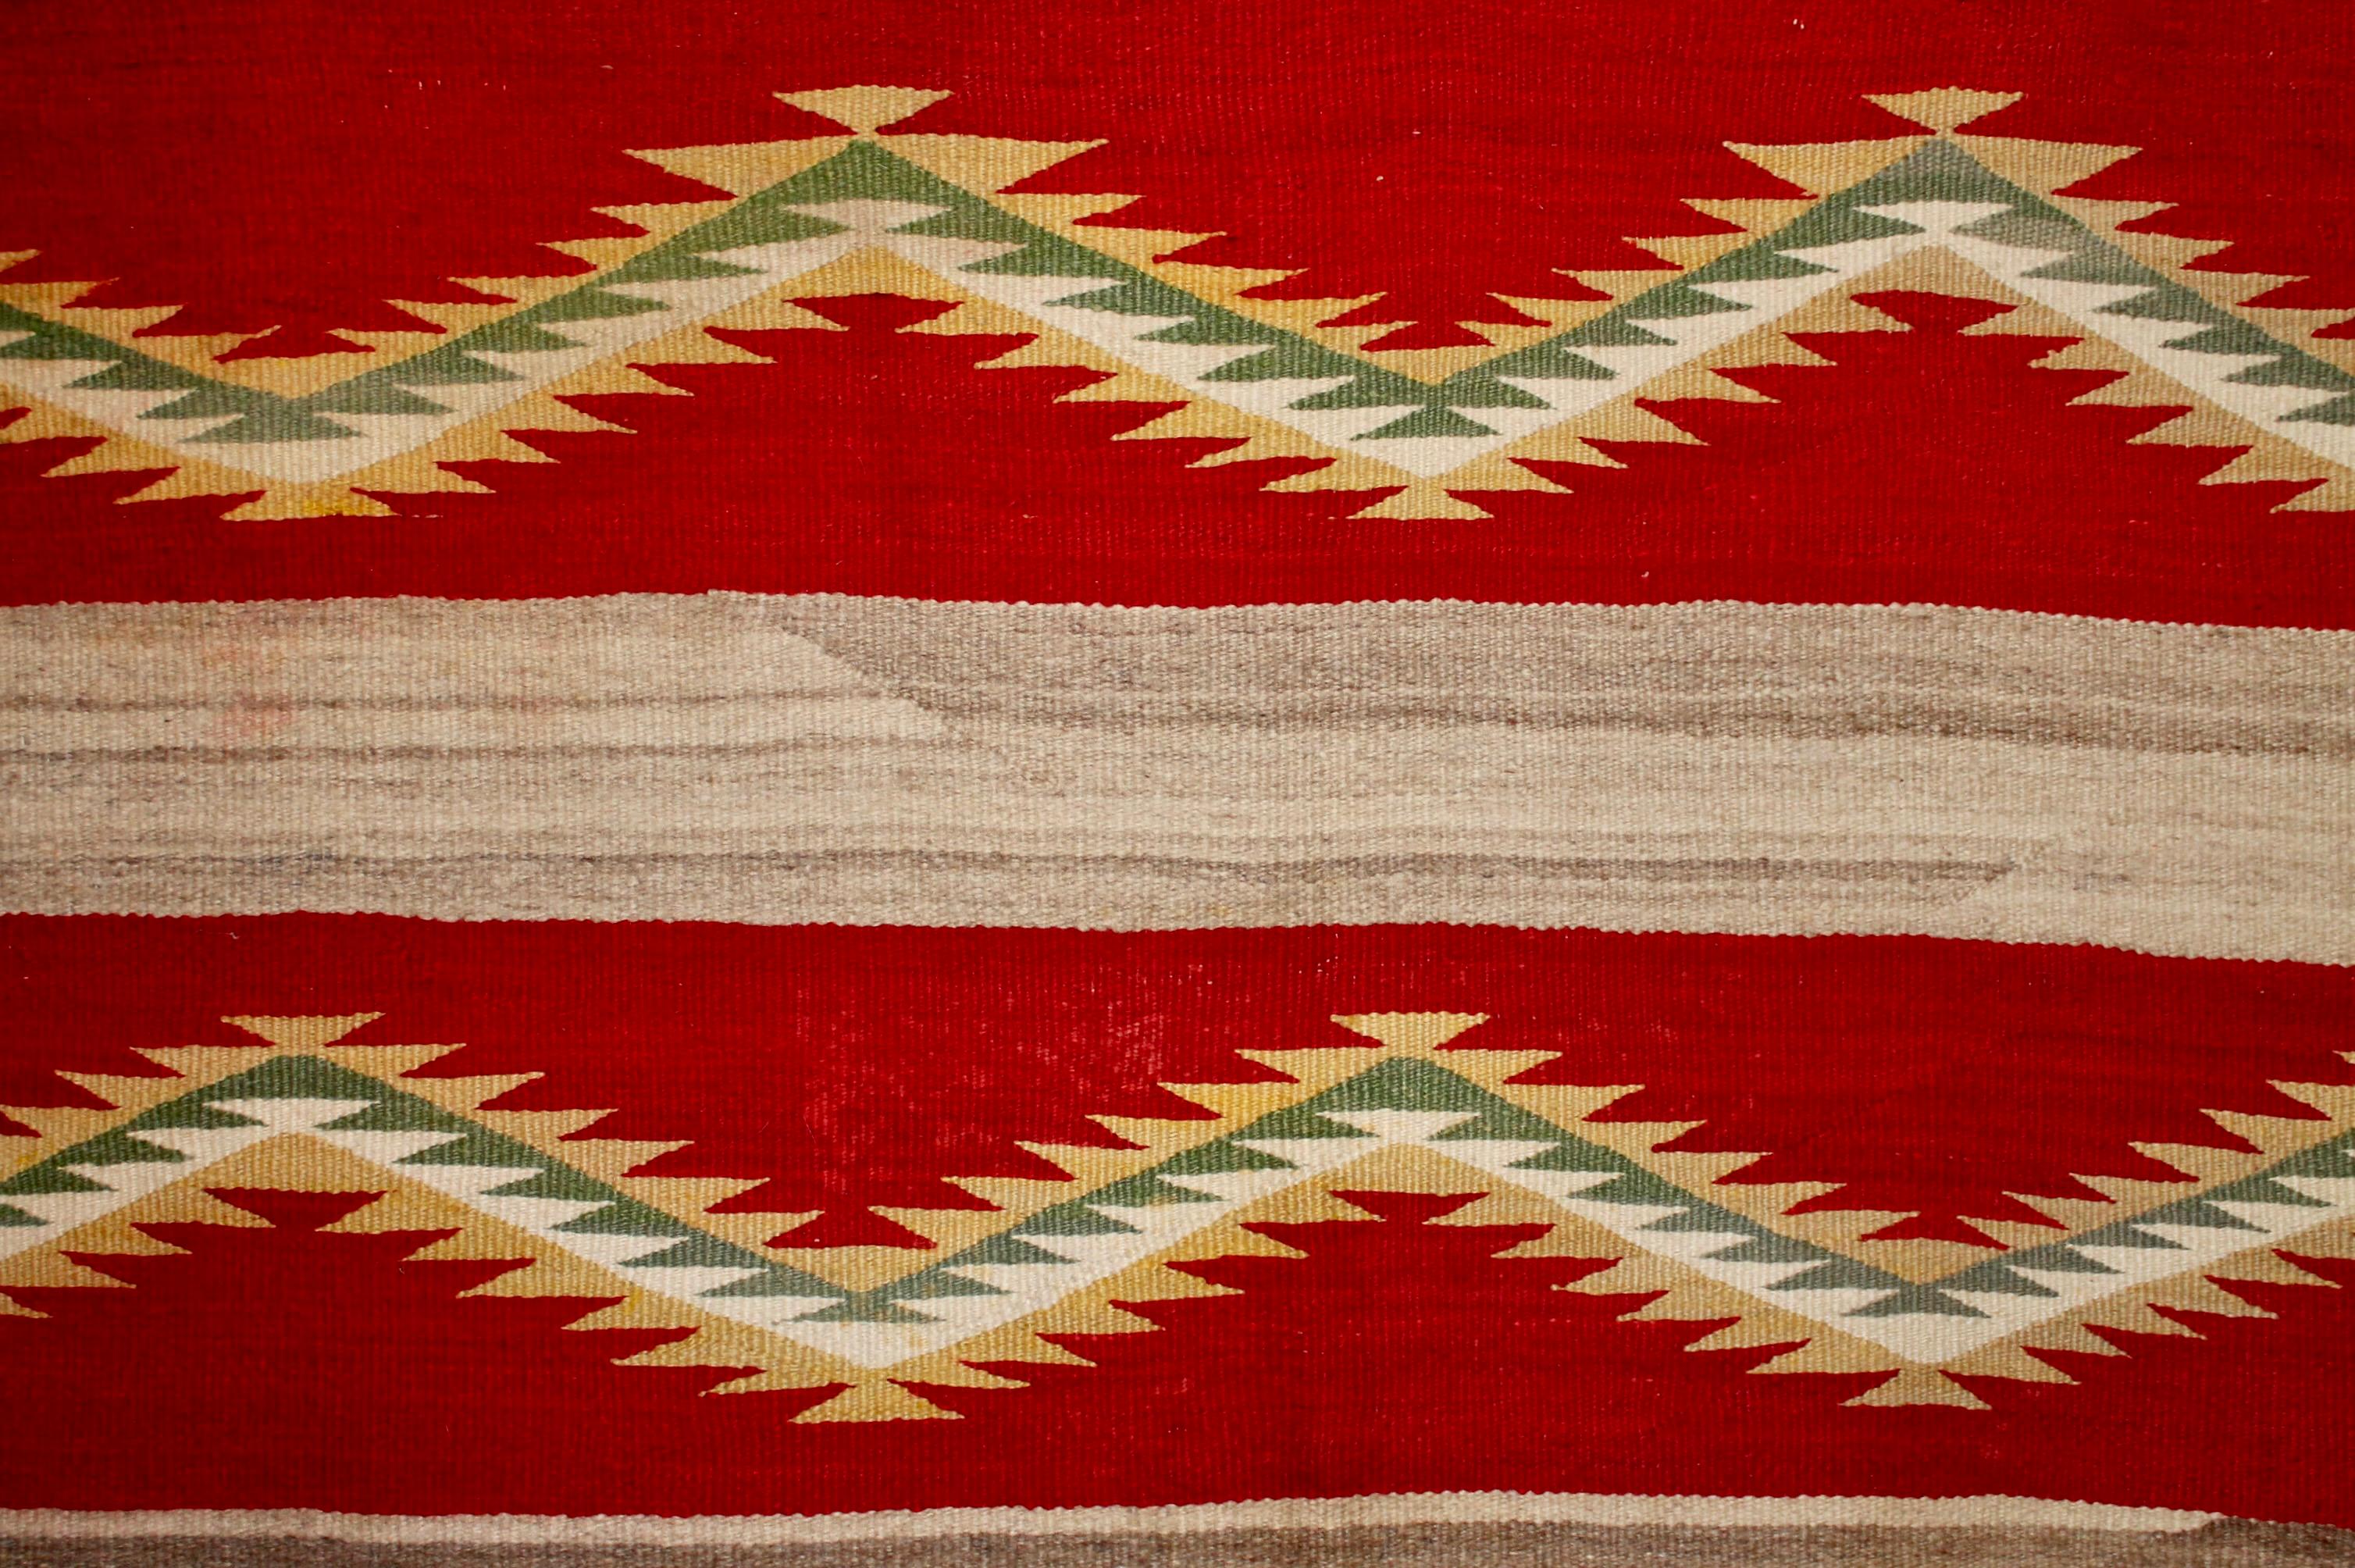 Navajo Transitional Blanket, circa 1880-1900 10